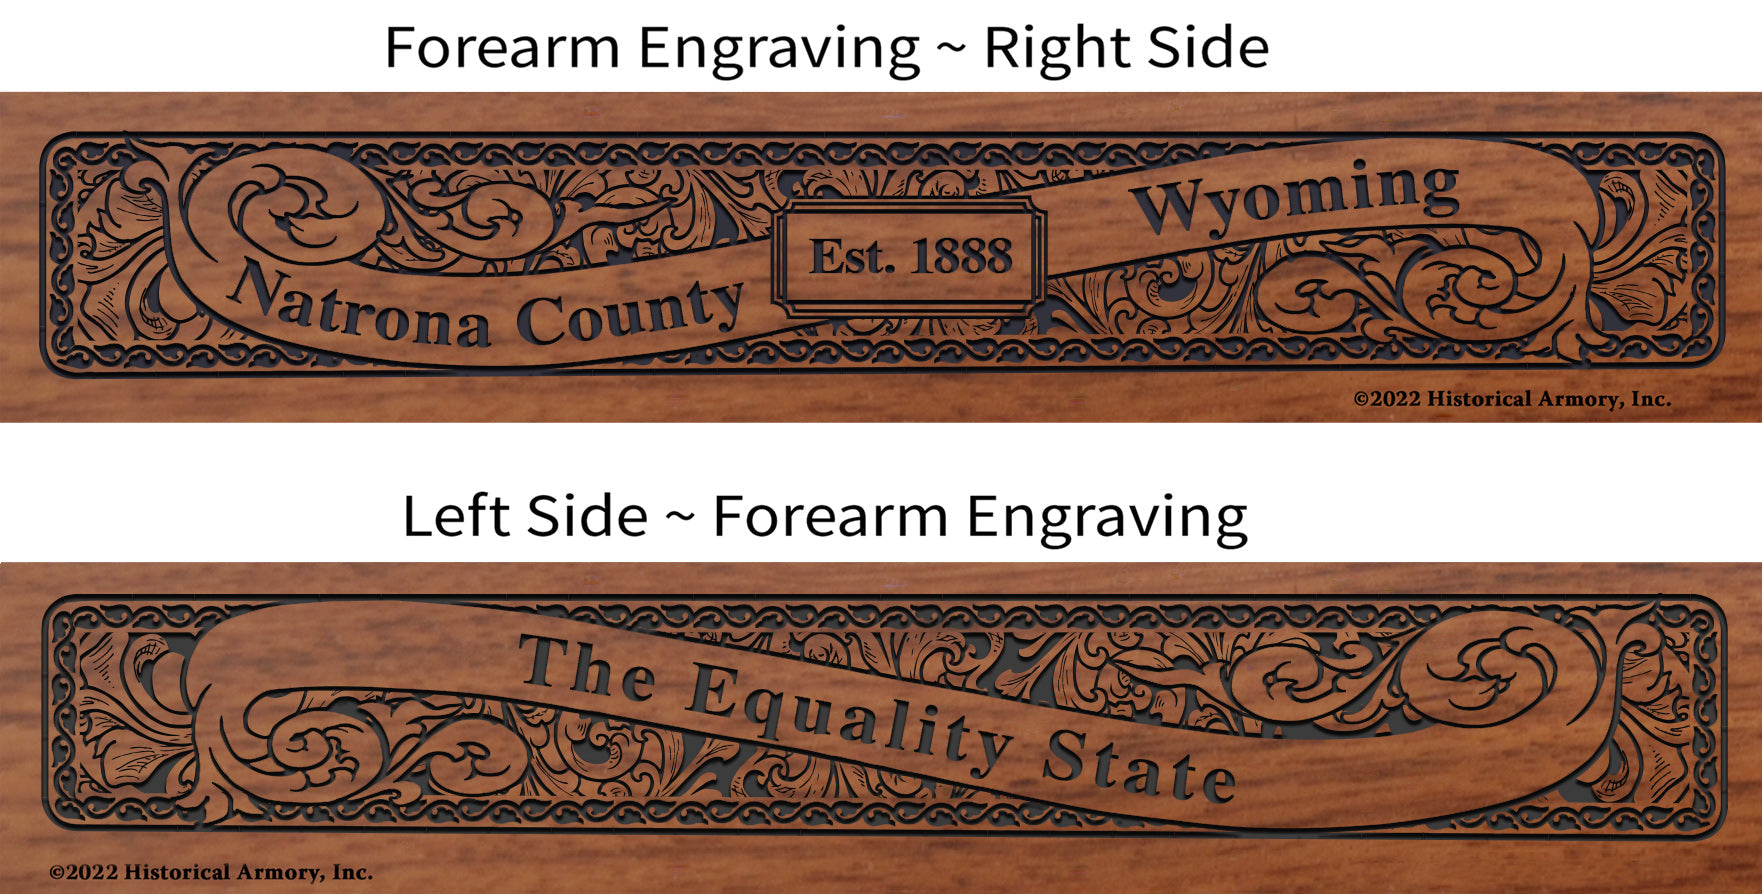 Natrona County Wyoming Engraved Rifle Forearm